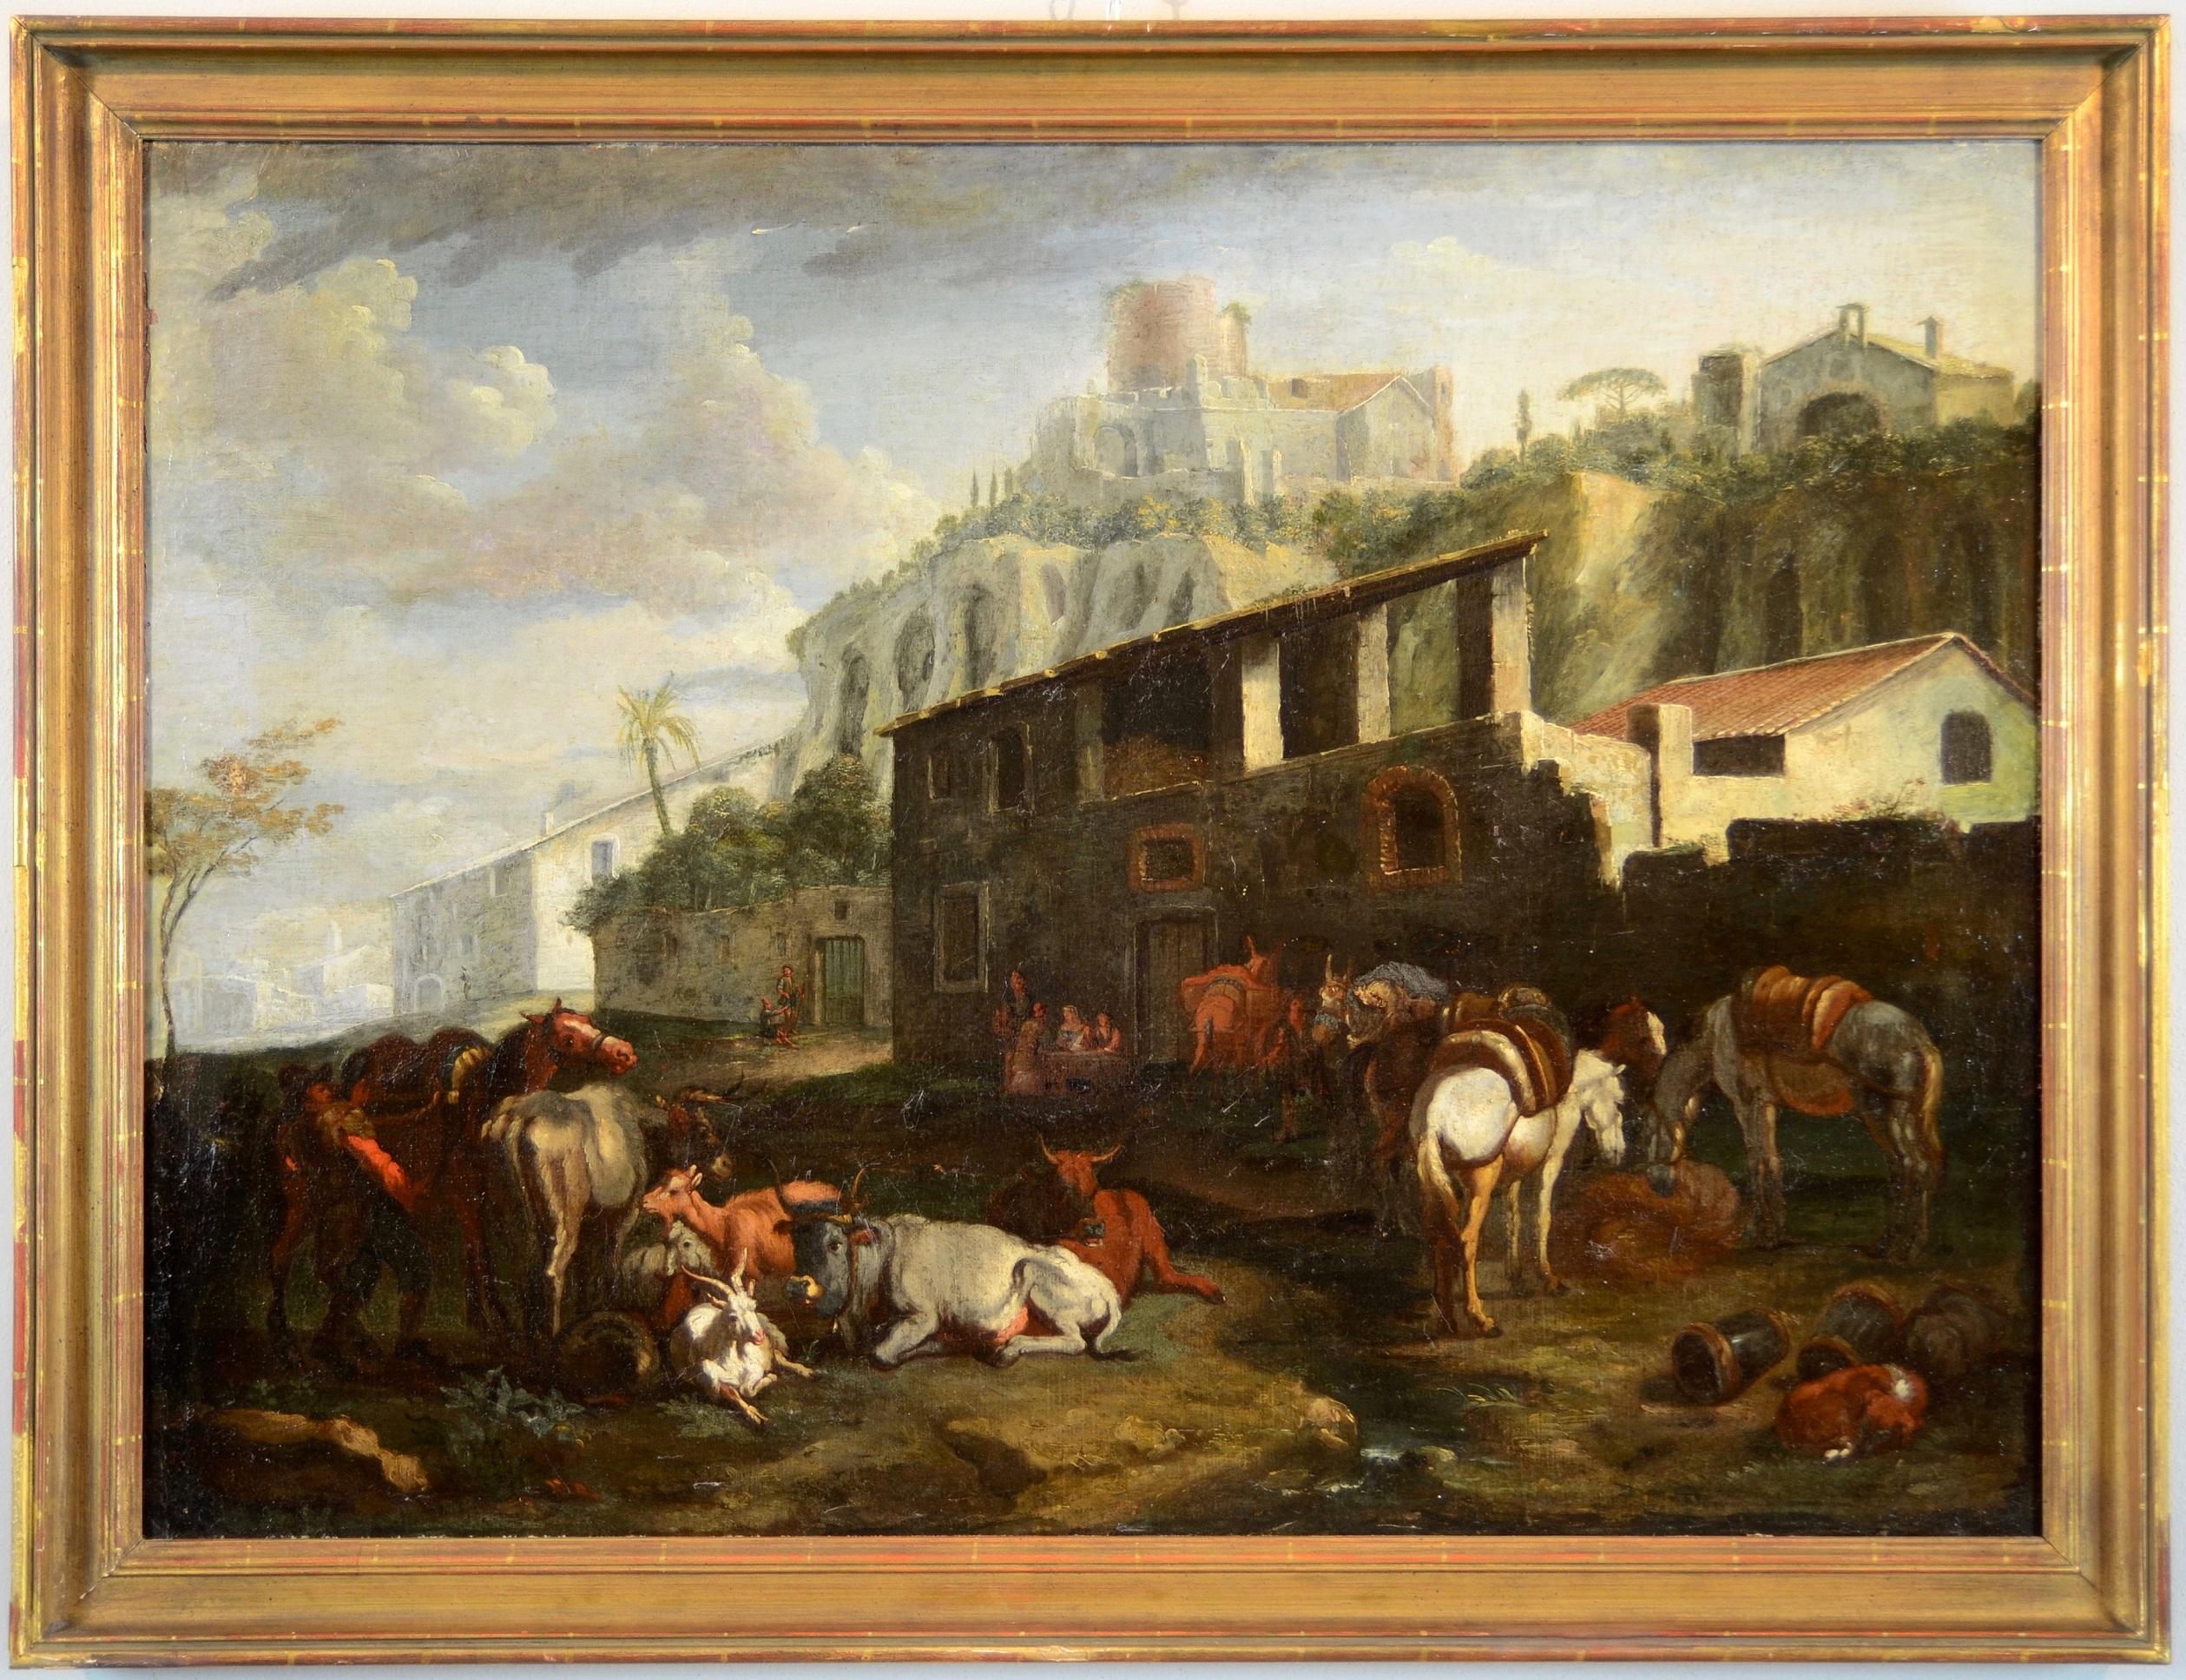 Van Bloemen Landscape Rome Paint 17/18th Century Oil on canvas Old master Italy - Painting by Pieter Van Bloemen (anvers 1674-1720)